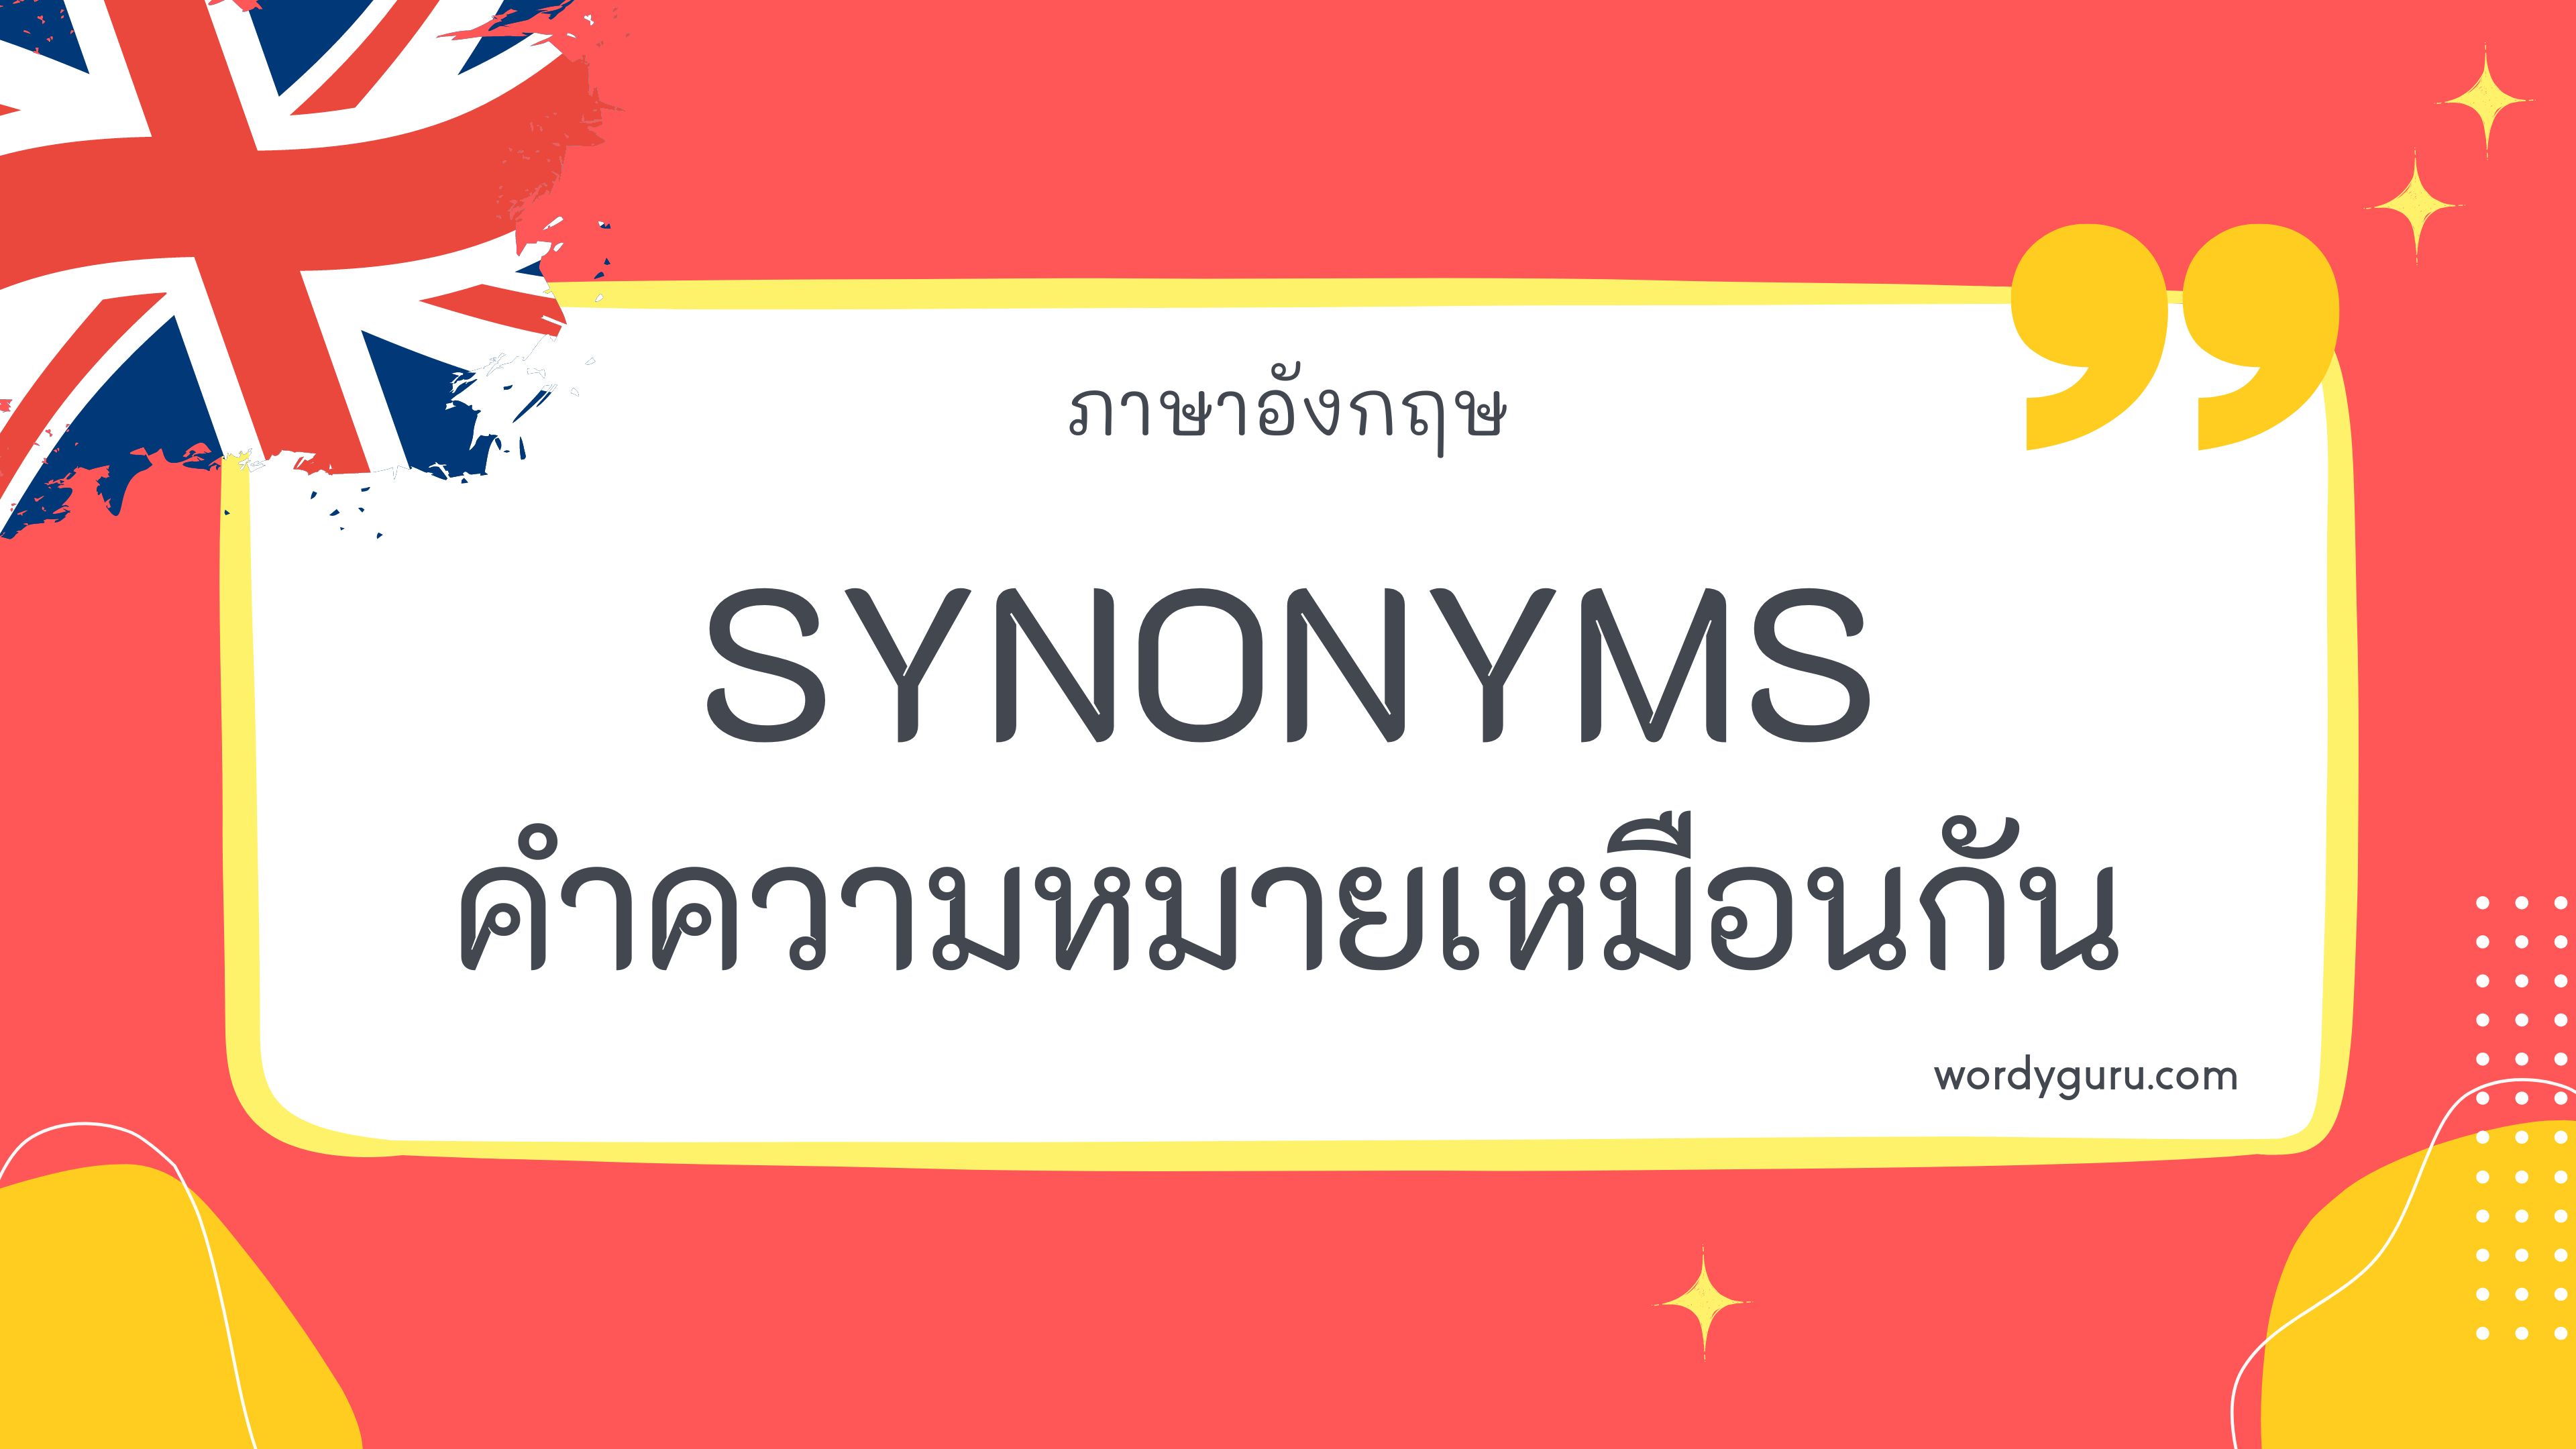 Synonyms – คำที่มีความหมายเหมือนกัน